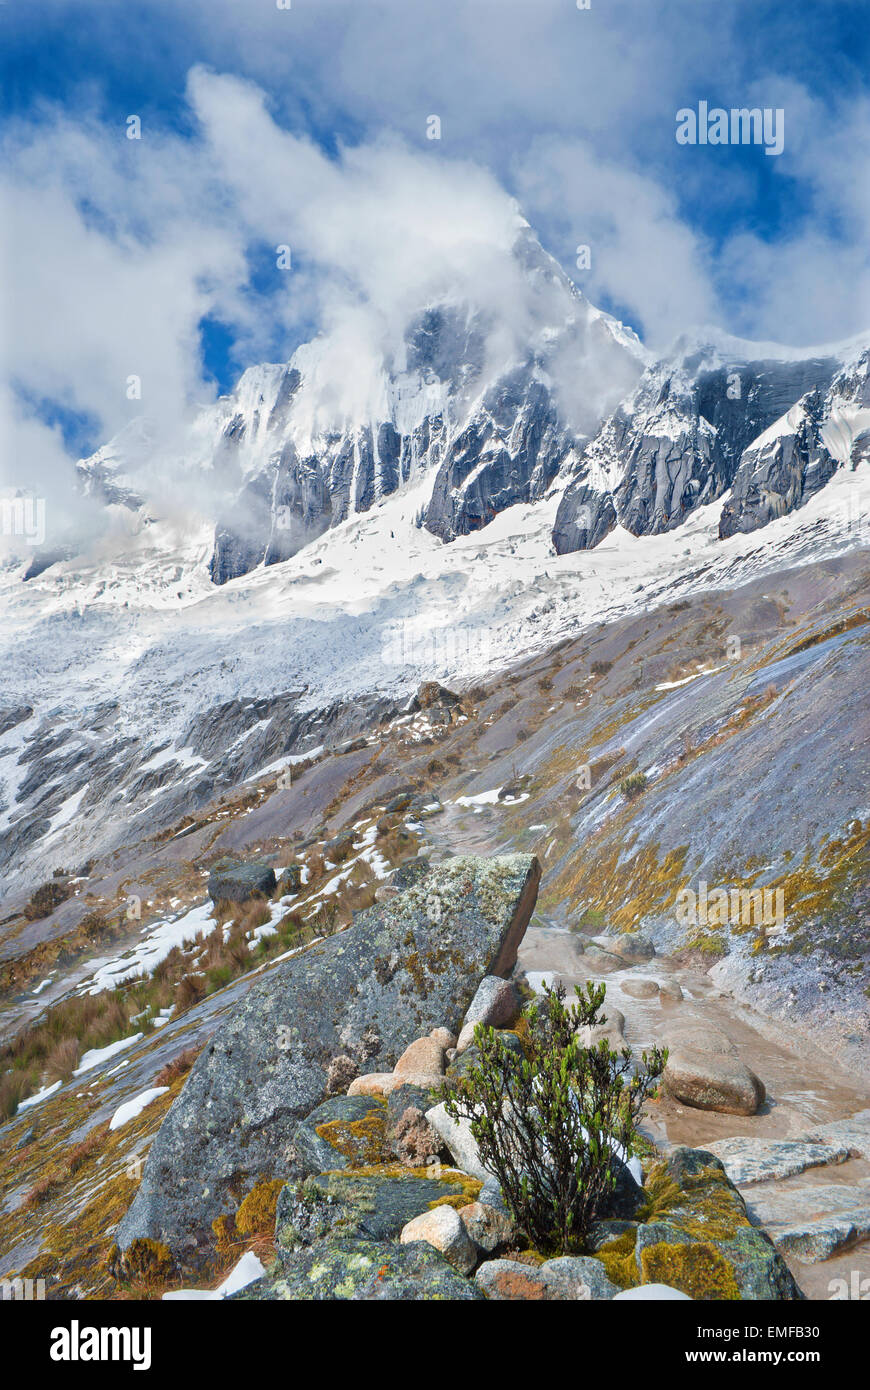 Peru - Tawllirahu peak (hispanicized spelling Taulliraju - 5,830) in Cordillera Blanca in the Andes from the trek of santa Cruz. Stock Photo